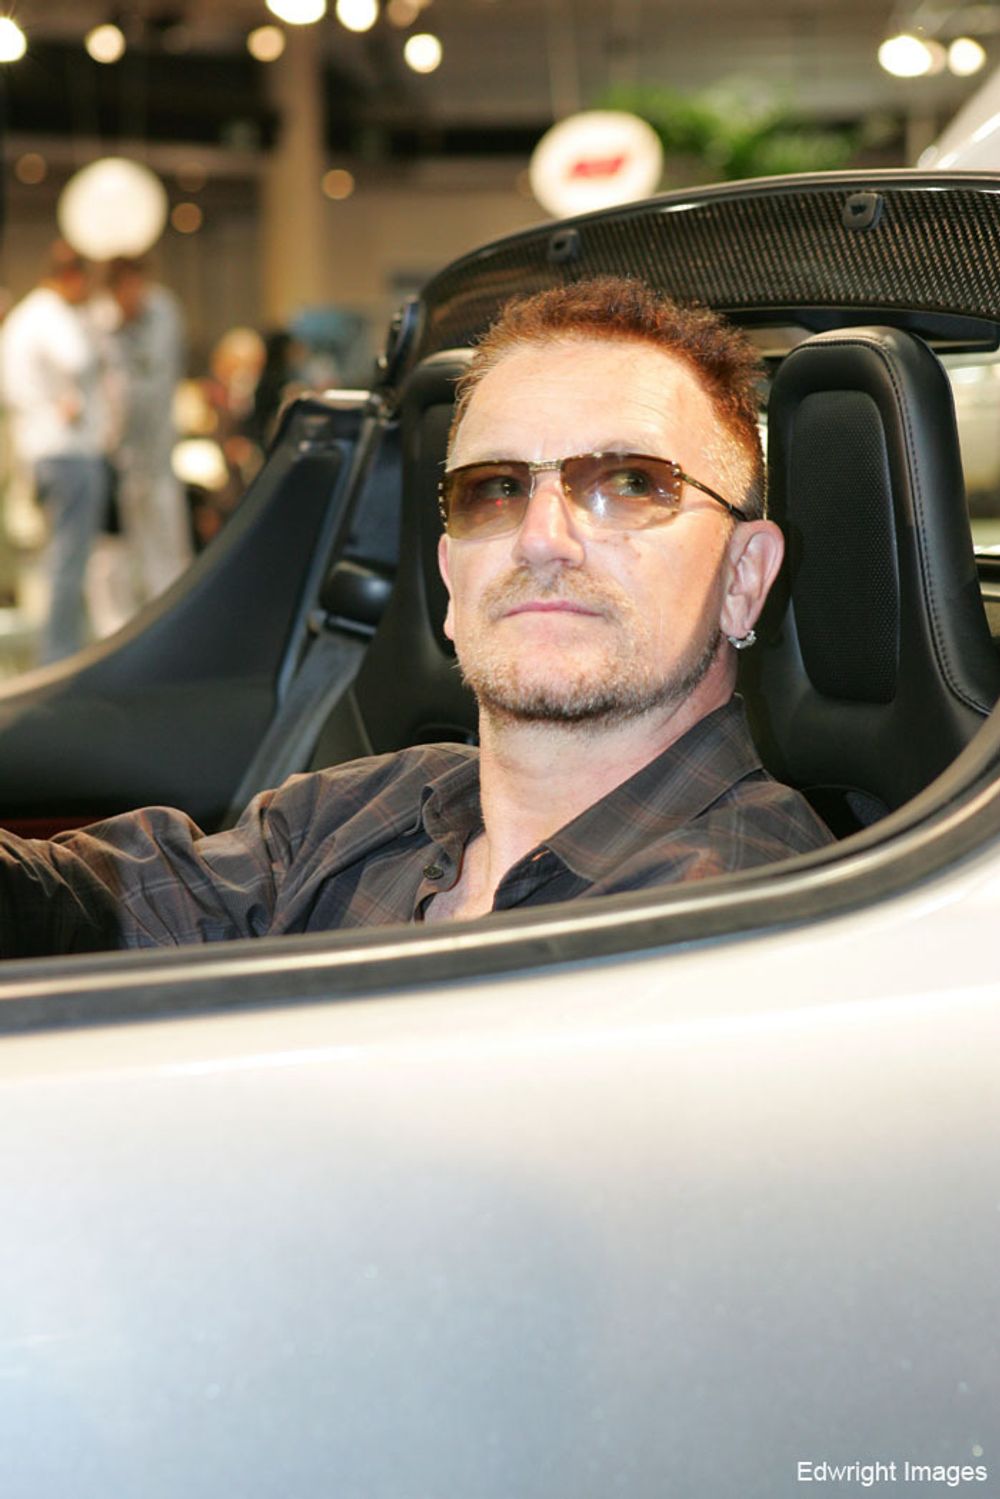 I Monaco for en drøy måned siden var det U2-vokalist Bono som viste seg fram bak rattet på en Tesla Roadster.